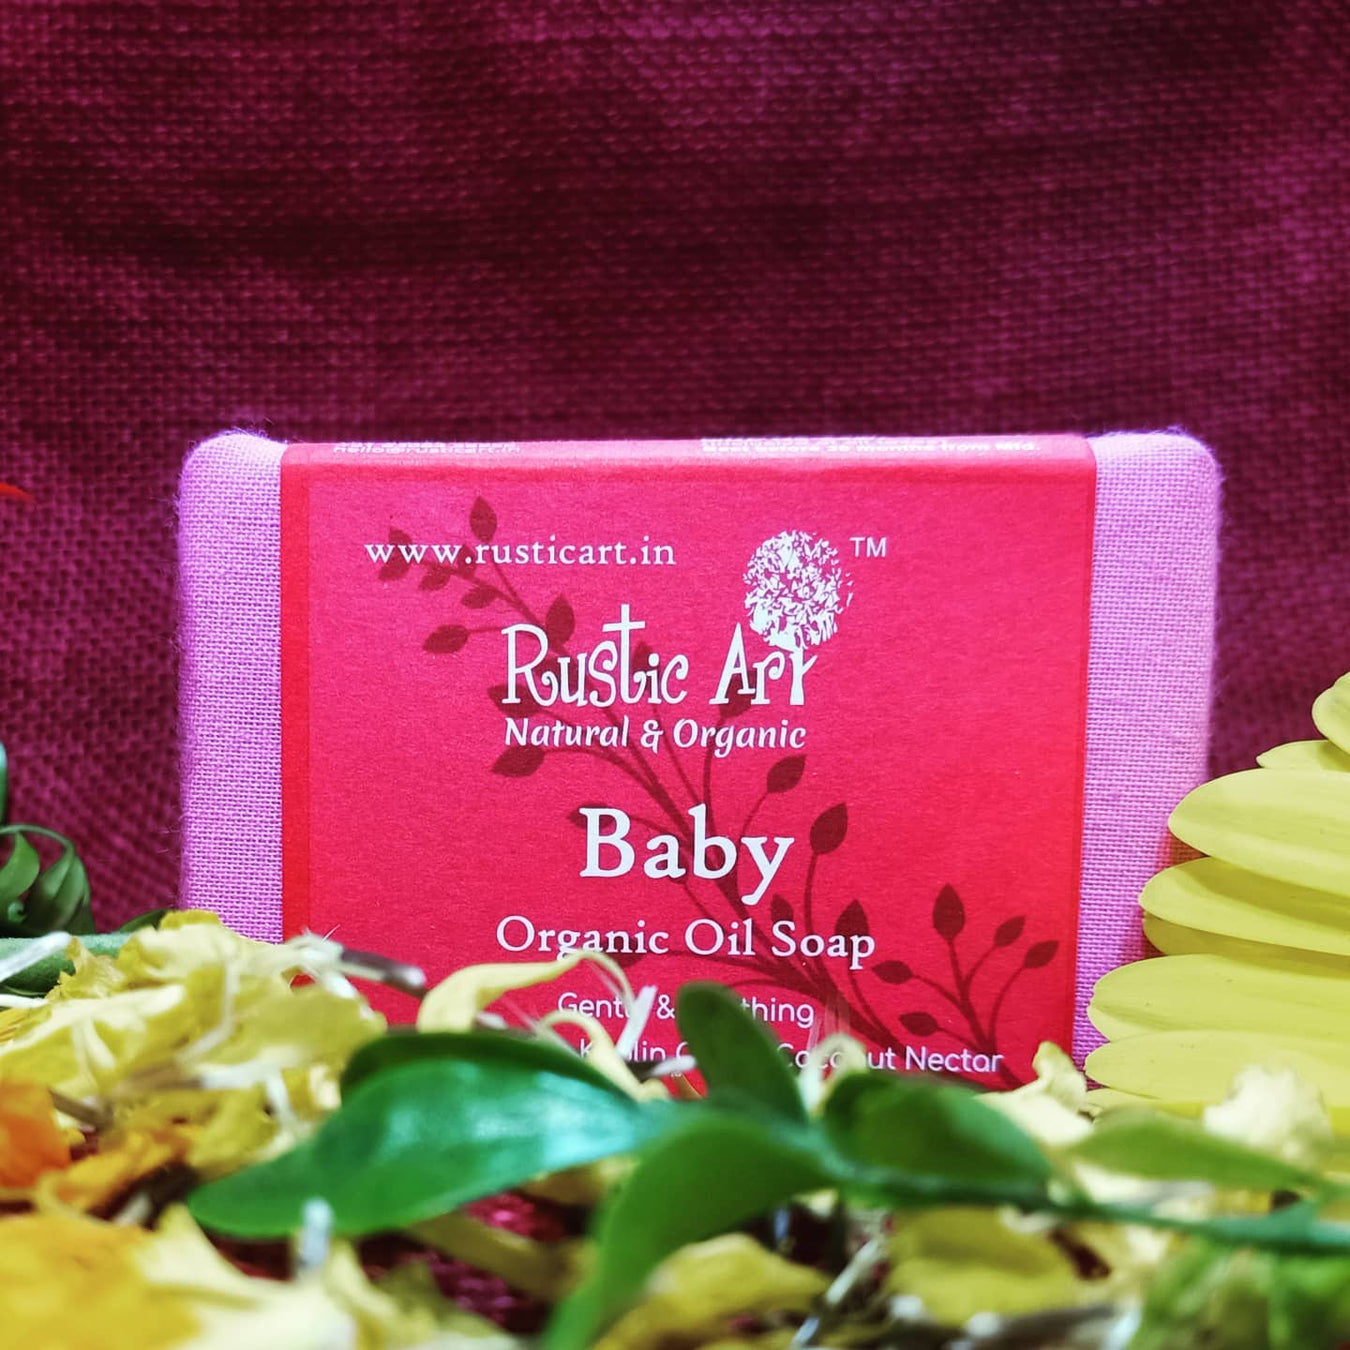 Organic and Natural Baby Skin Care